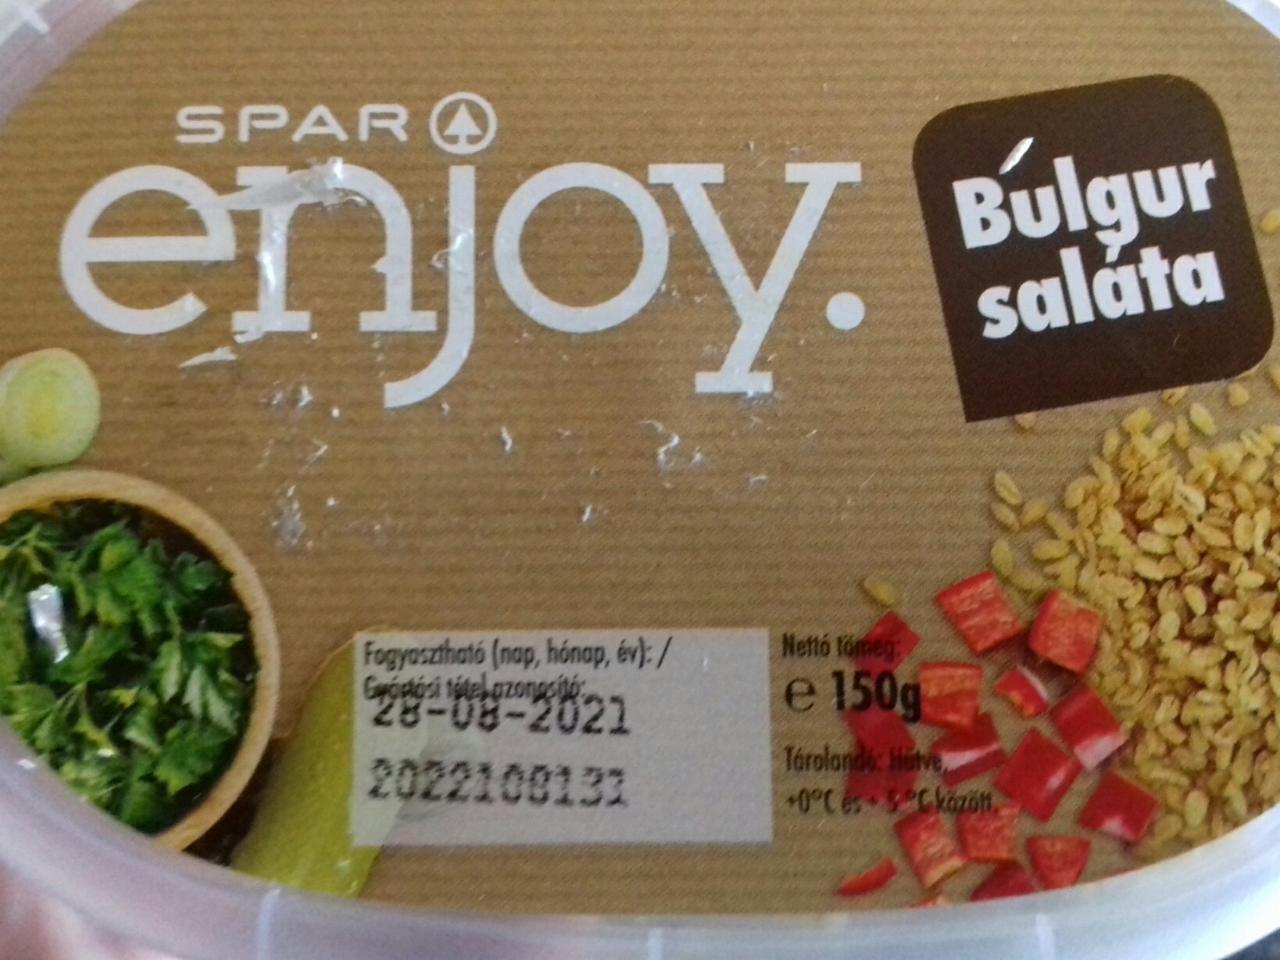 Képek - Bulgur saláta Spar enjoy